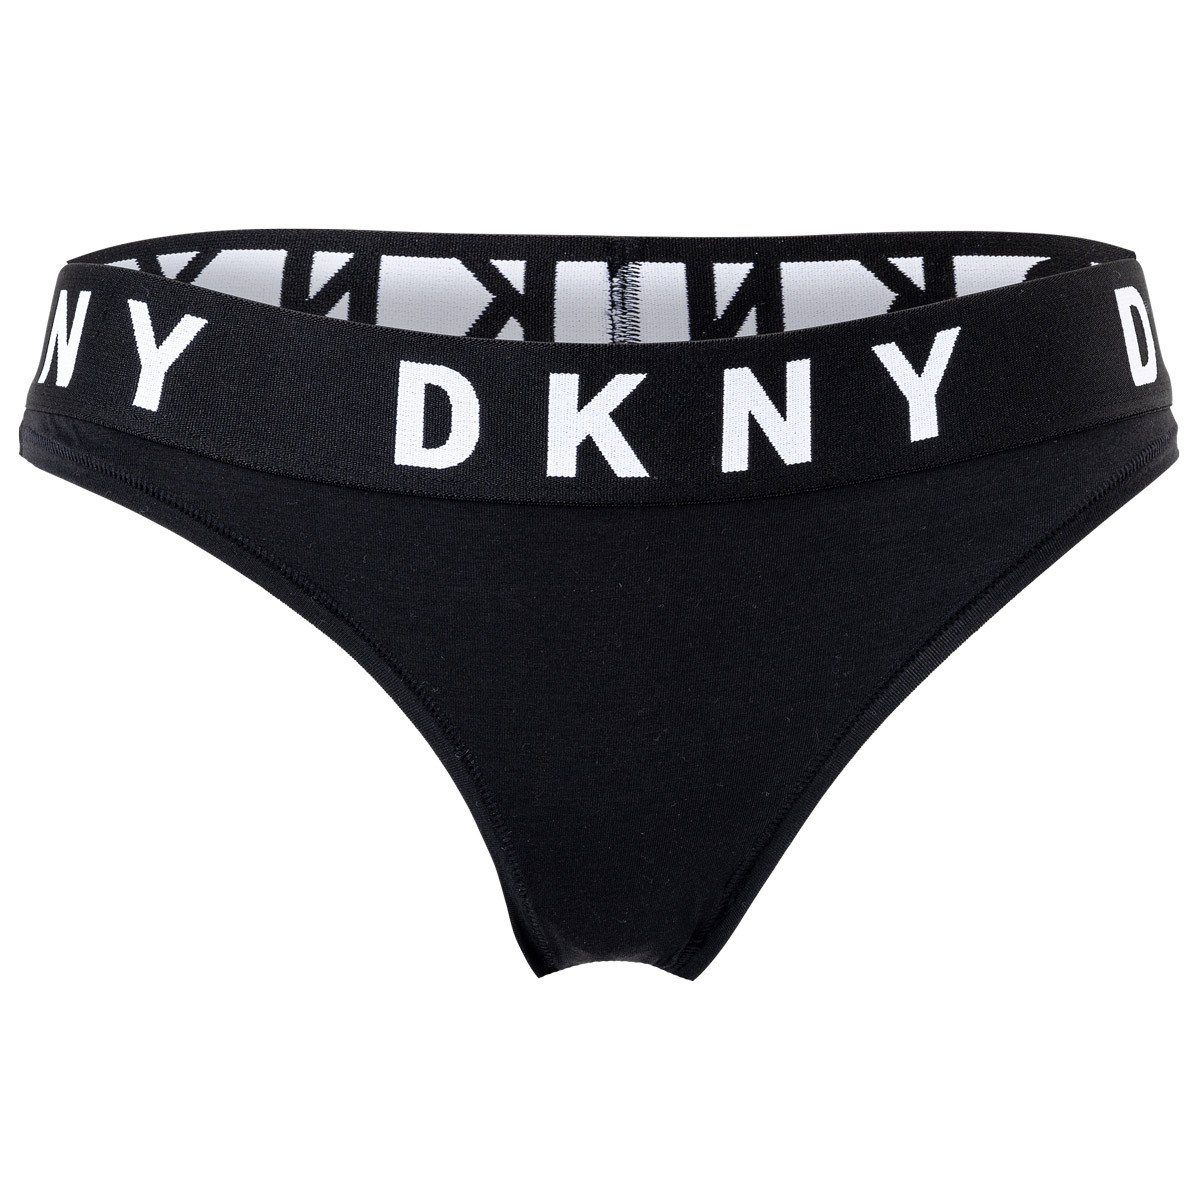 DKNY Panty Damen Slip - Brief, Cotton Modal Stretch Schwarz